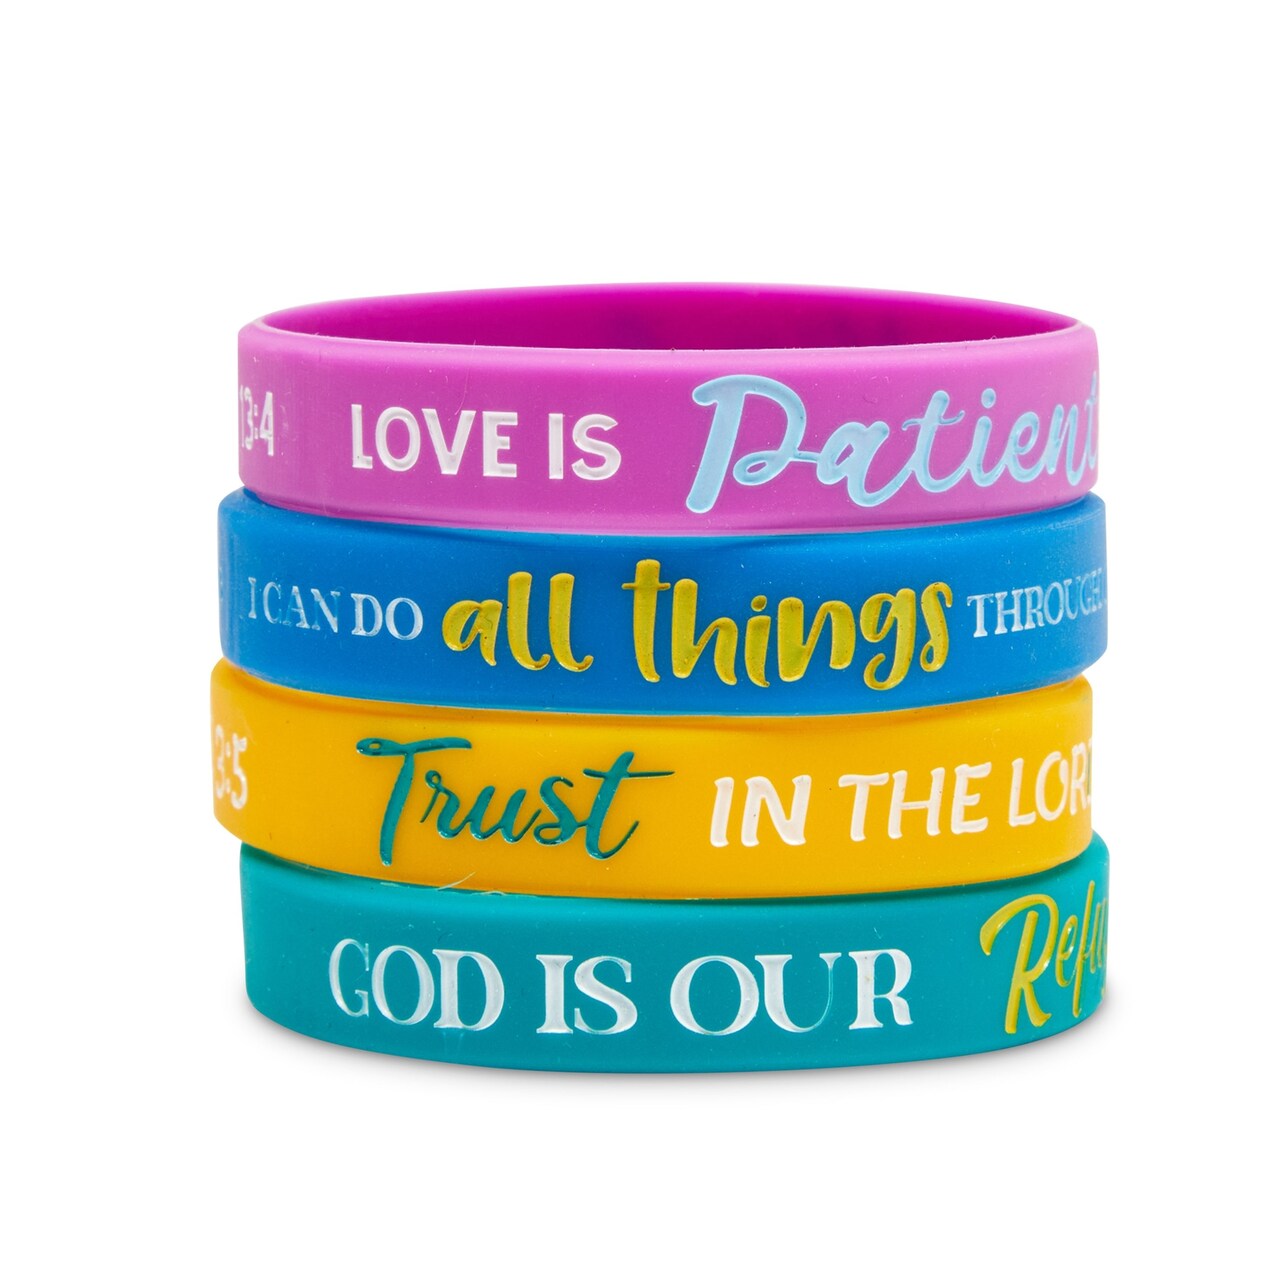 24 Pcs Christian Religious Motivational Wristbands Wrist Bands